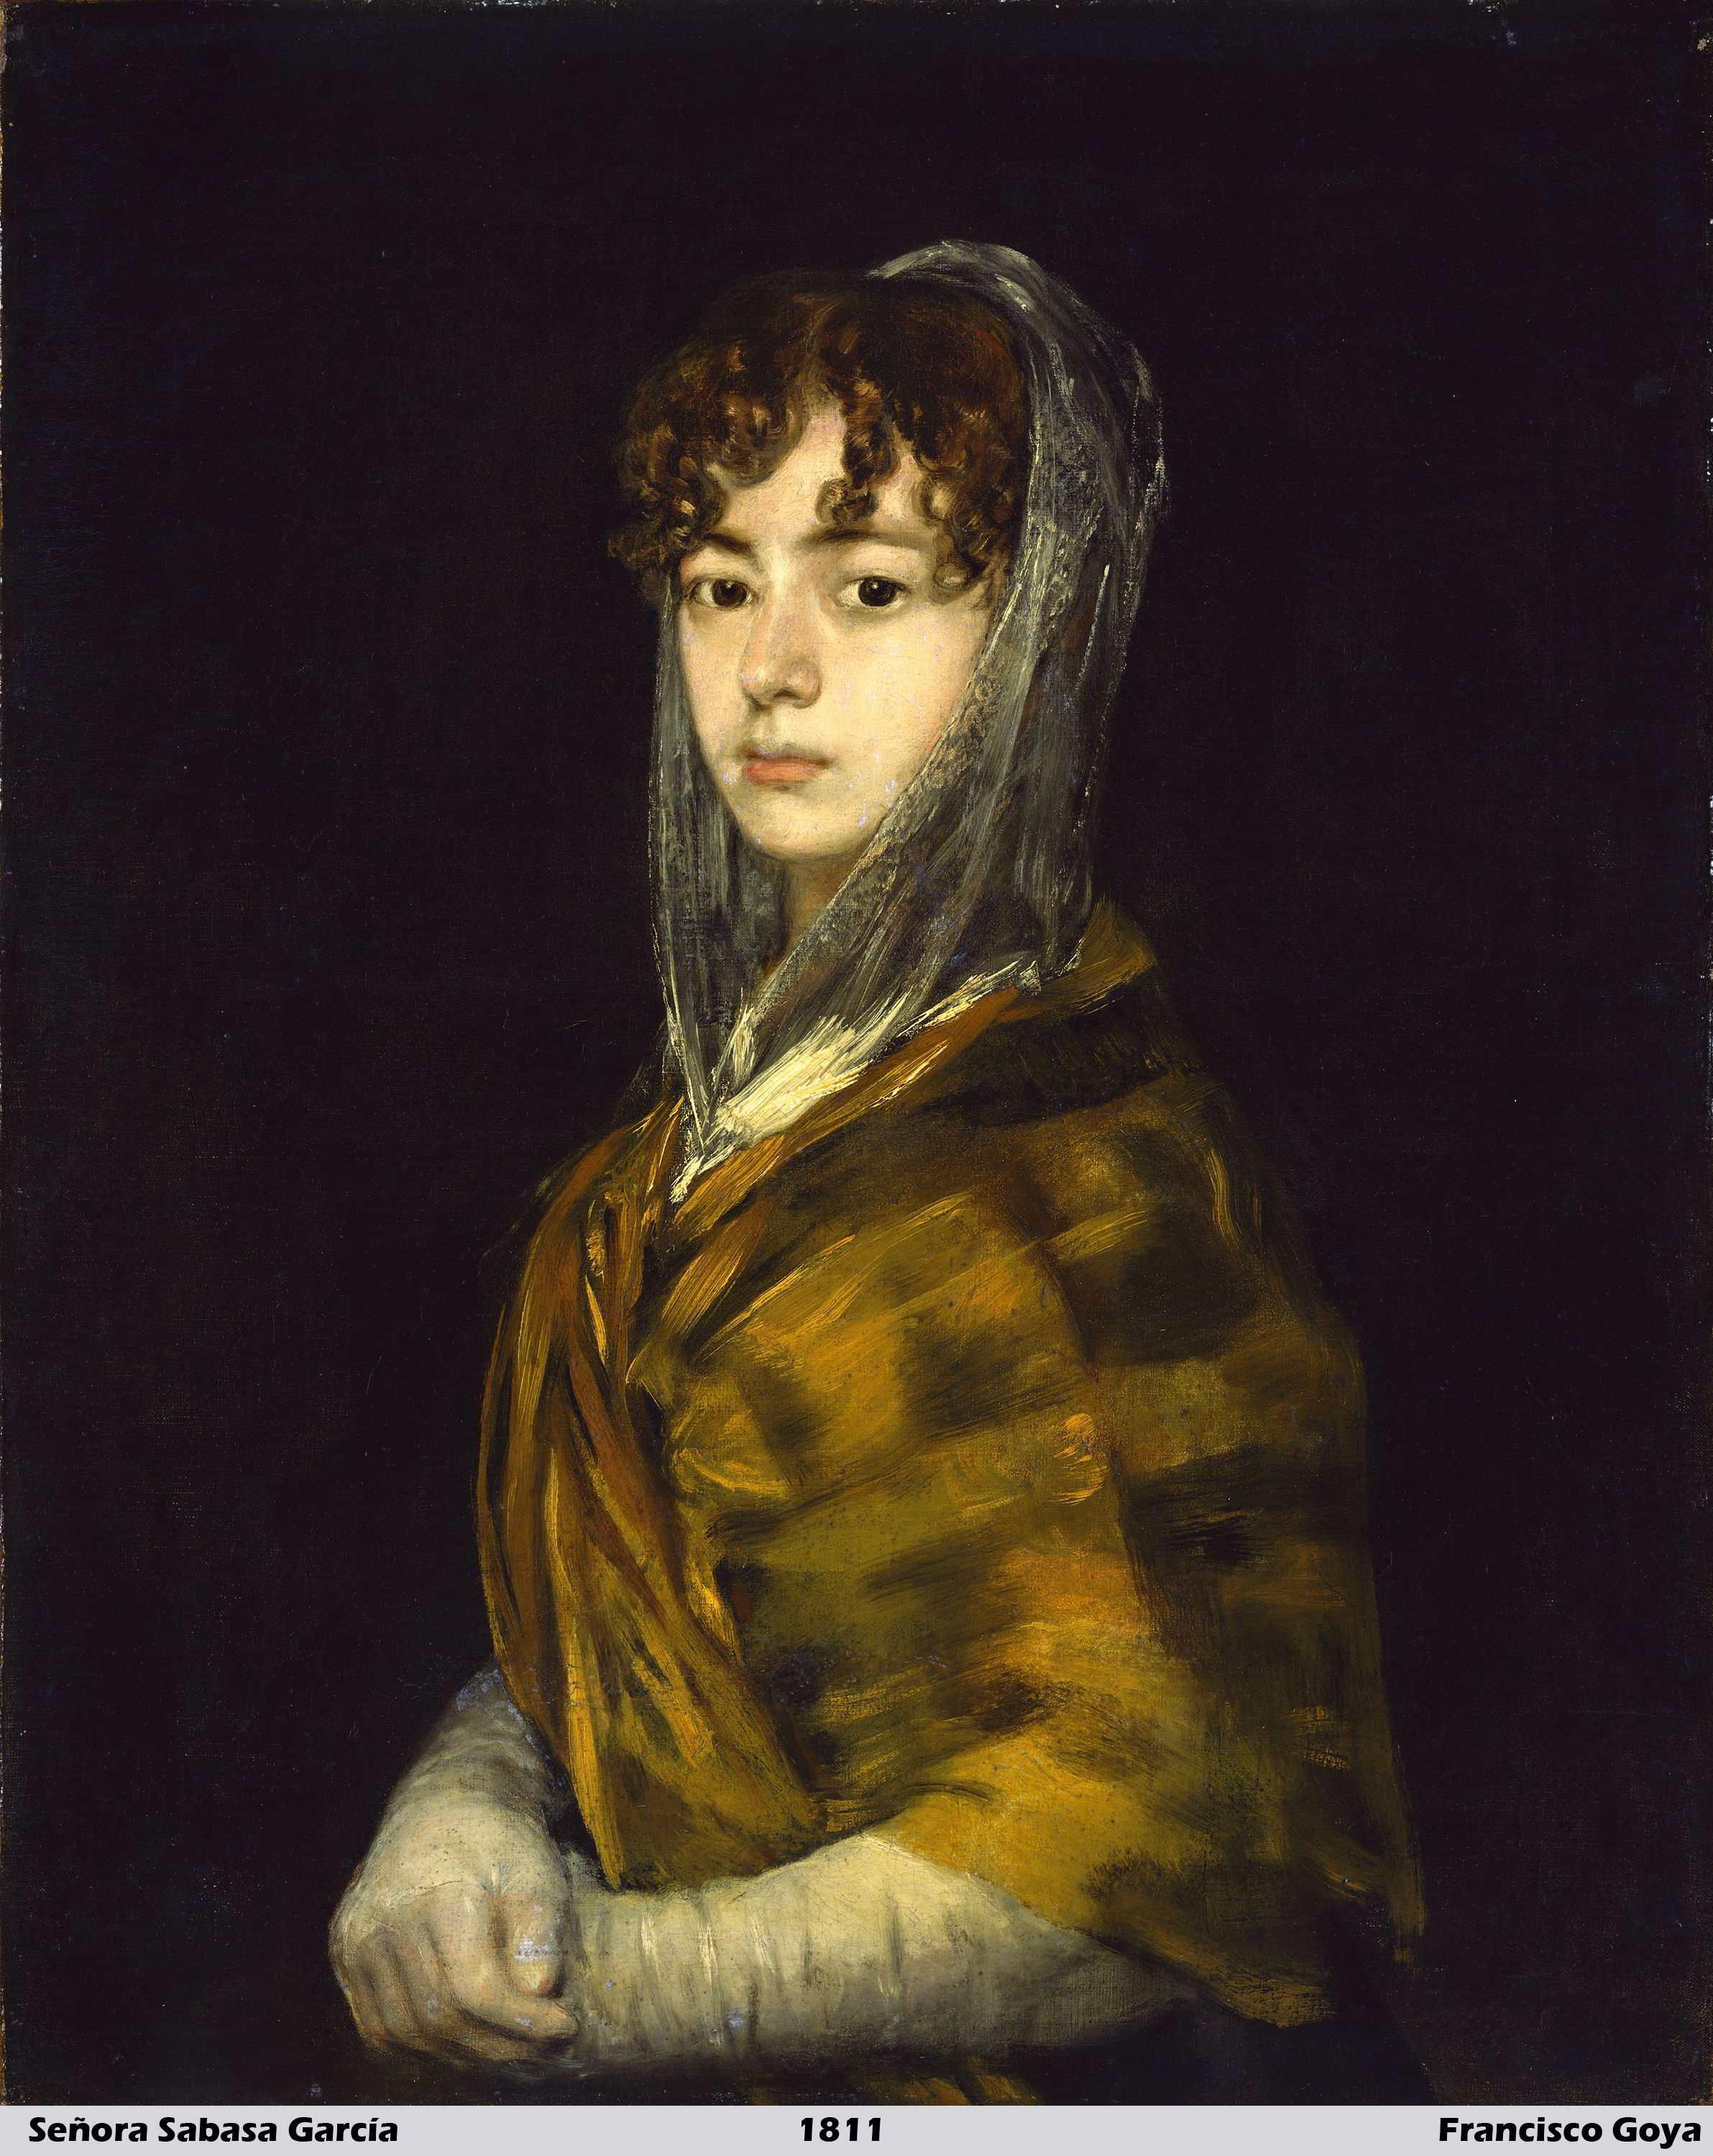 Senora Sabasa Garcia by Francisco Goya